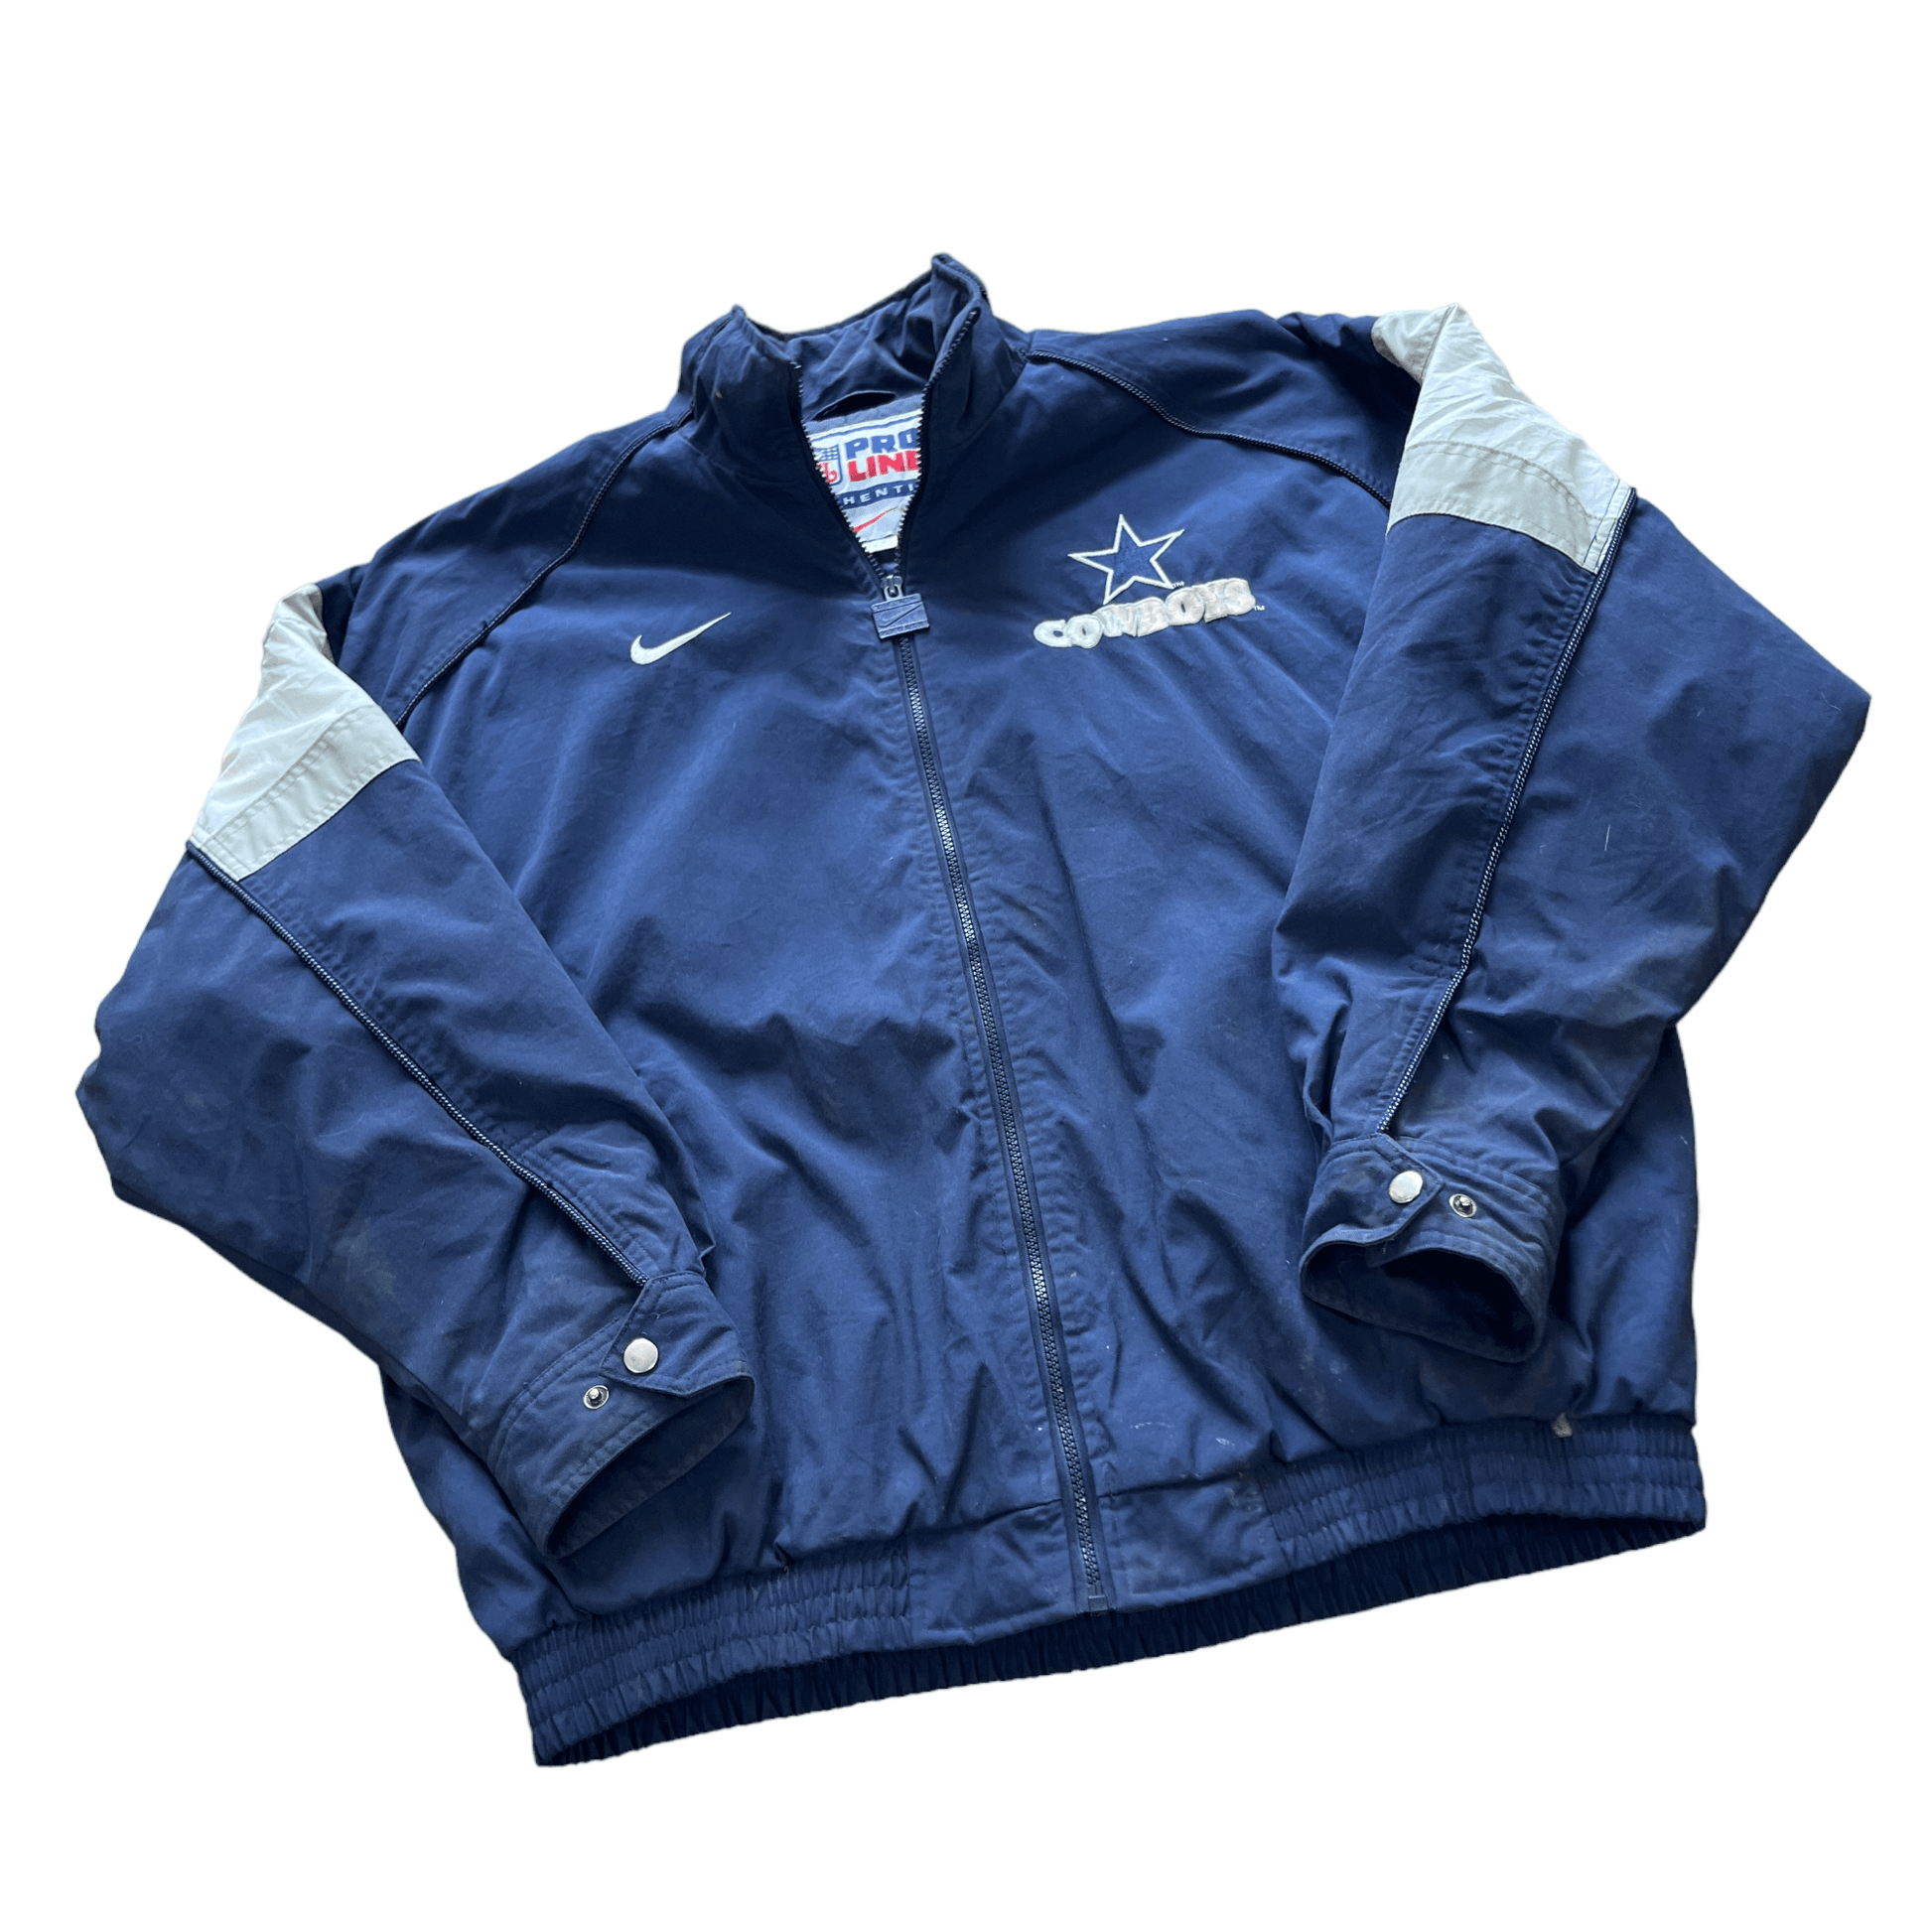 Vintage 90s Navy Blue Nike NFL Pro Dallas Cowboys Puffer Coat - Extra Large - The Streetwear Studio